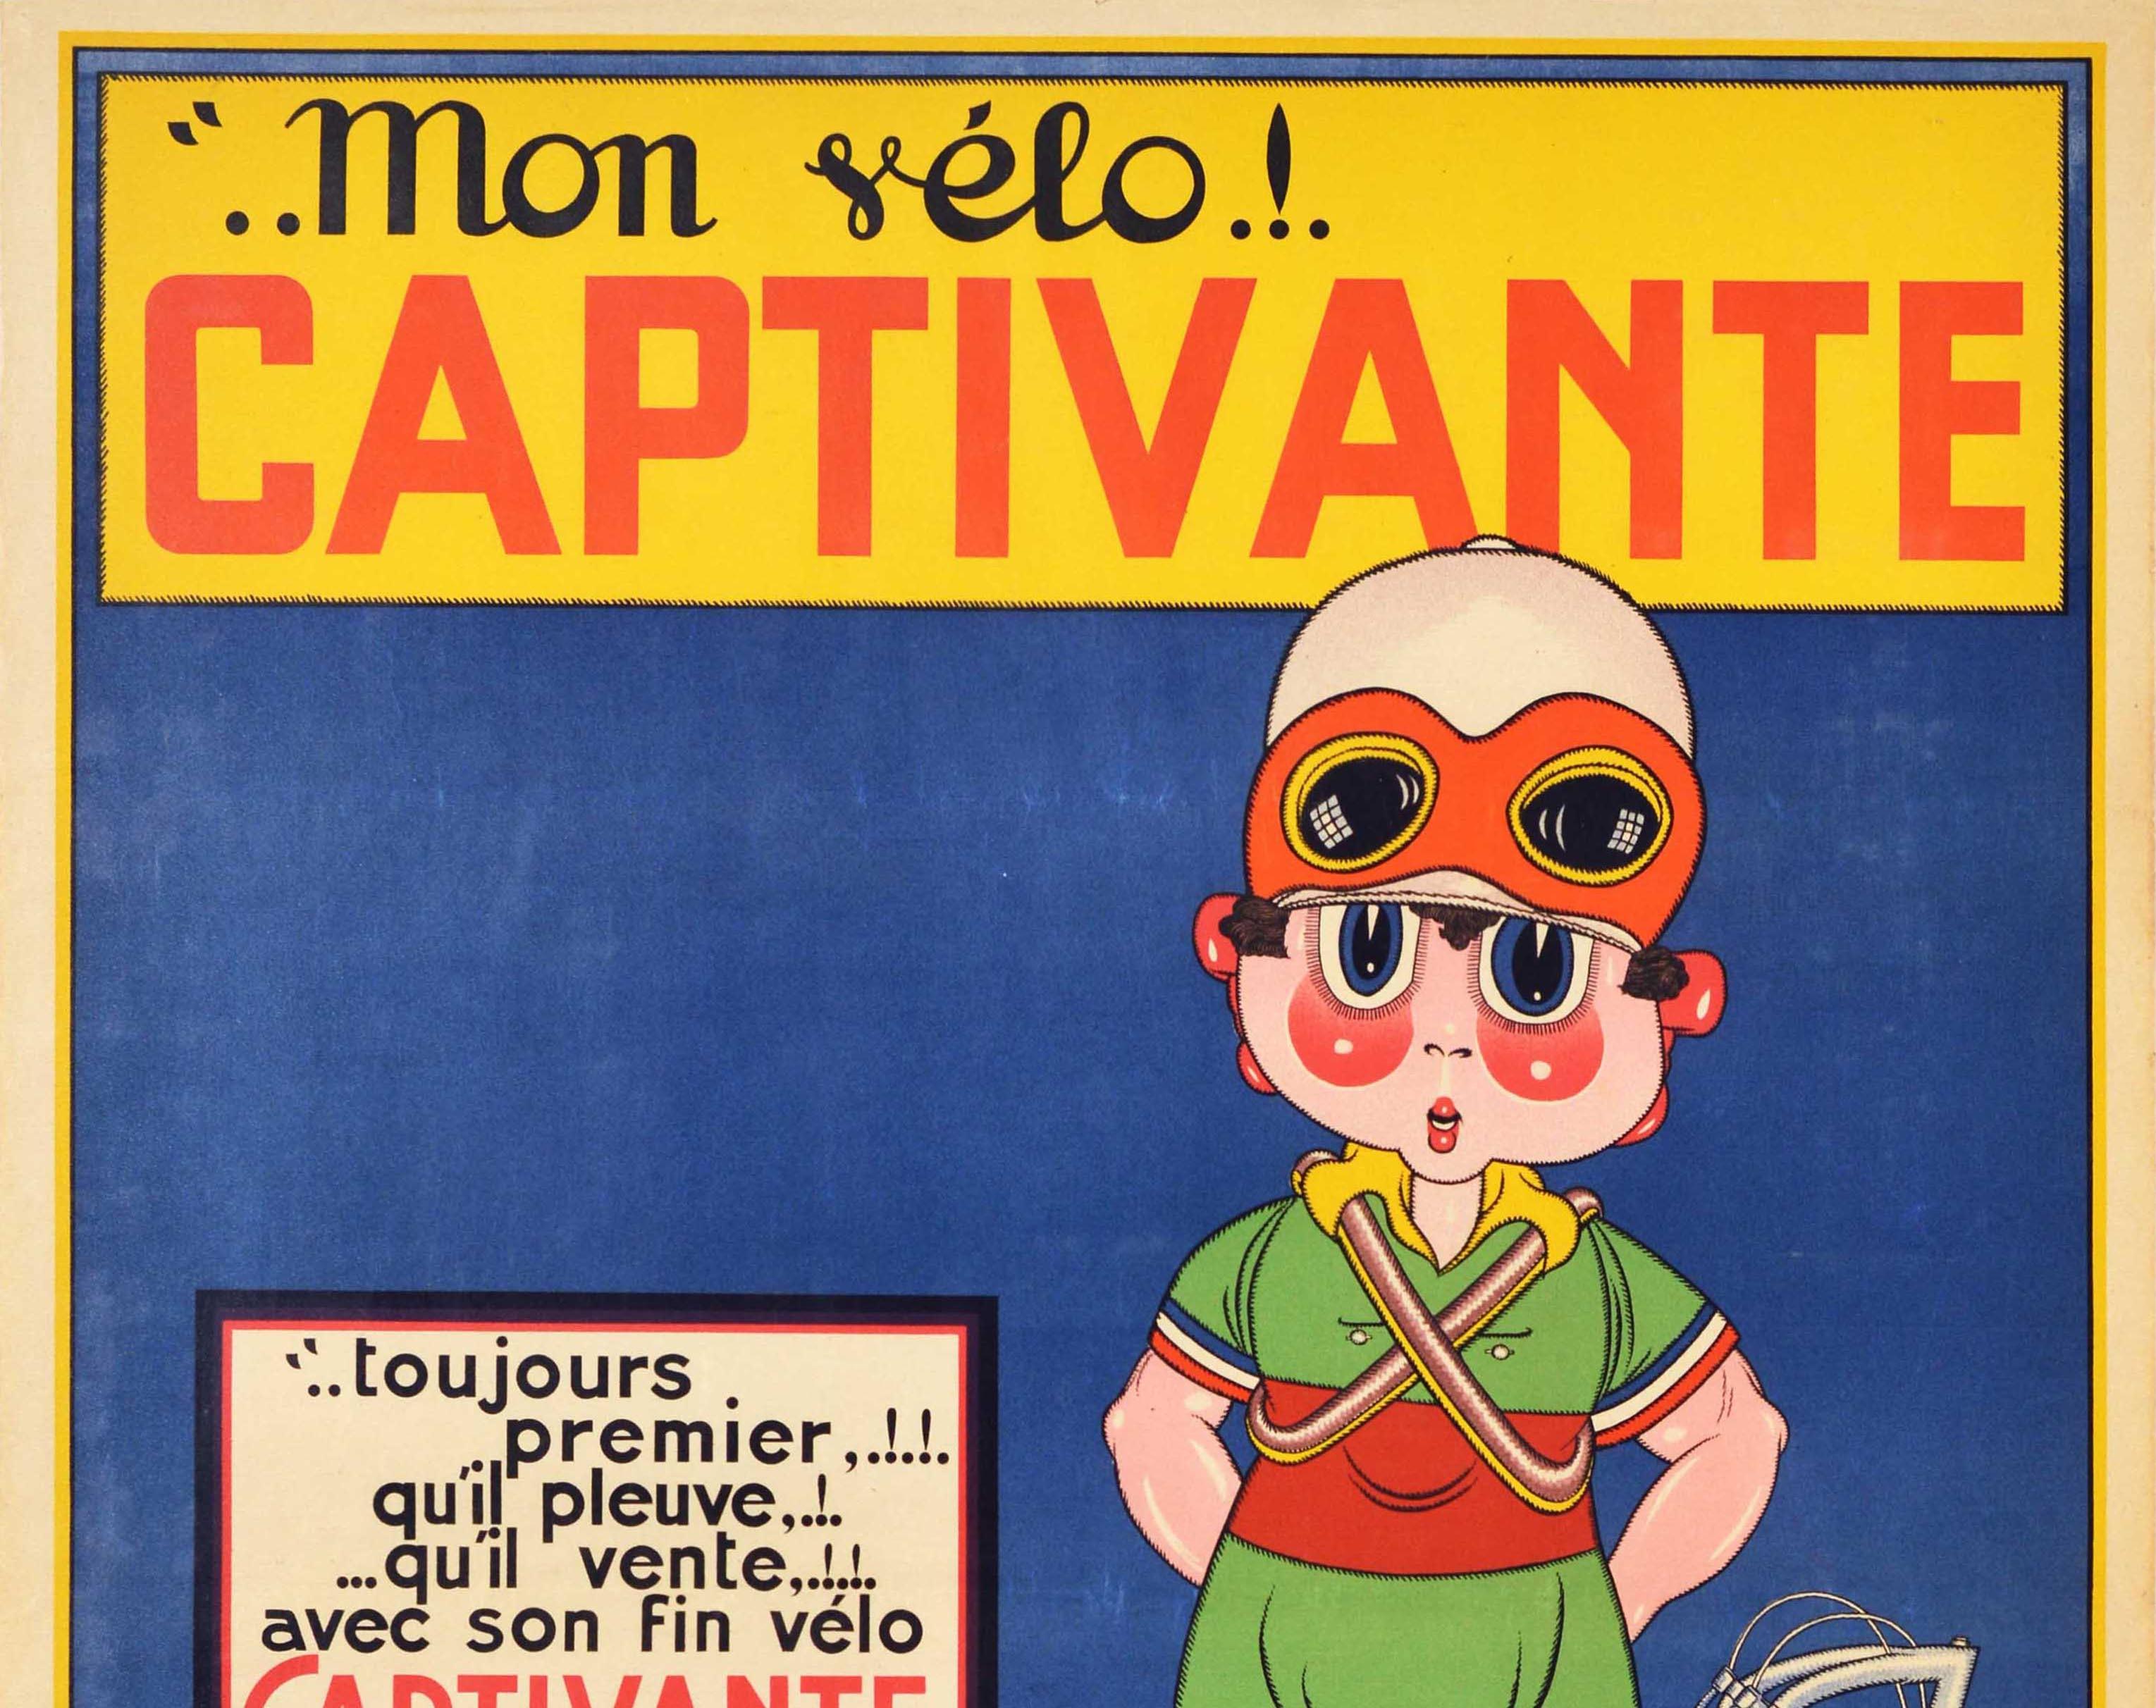 Original Vintage Poster Mon Velo Captivante Bicycle Advertising Art Child & Dog - Print by Unknown